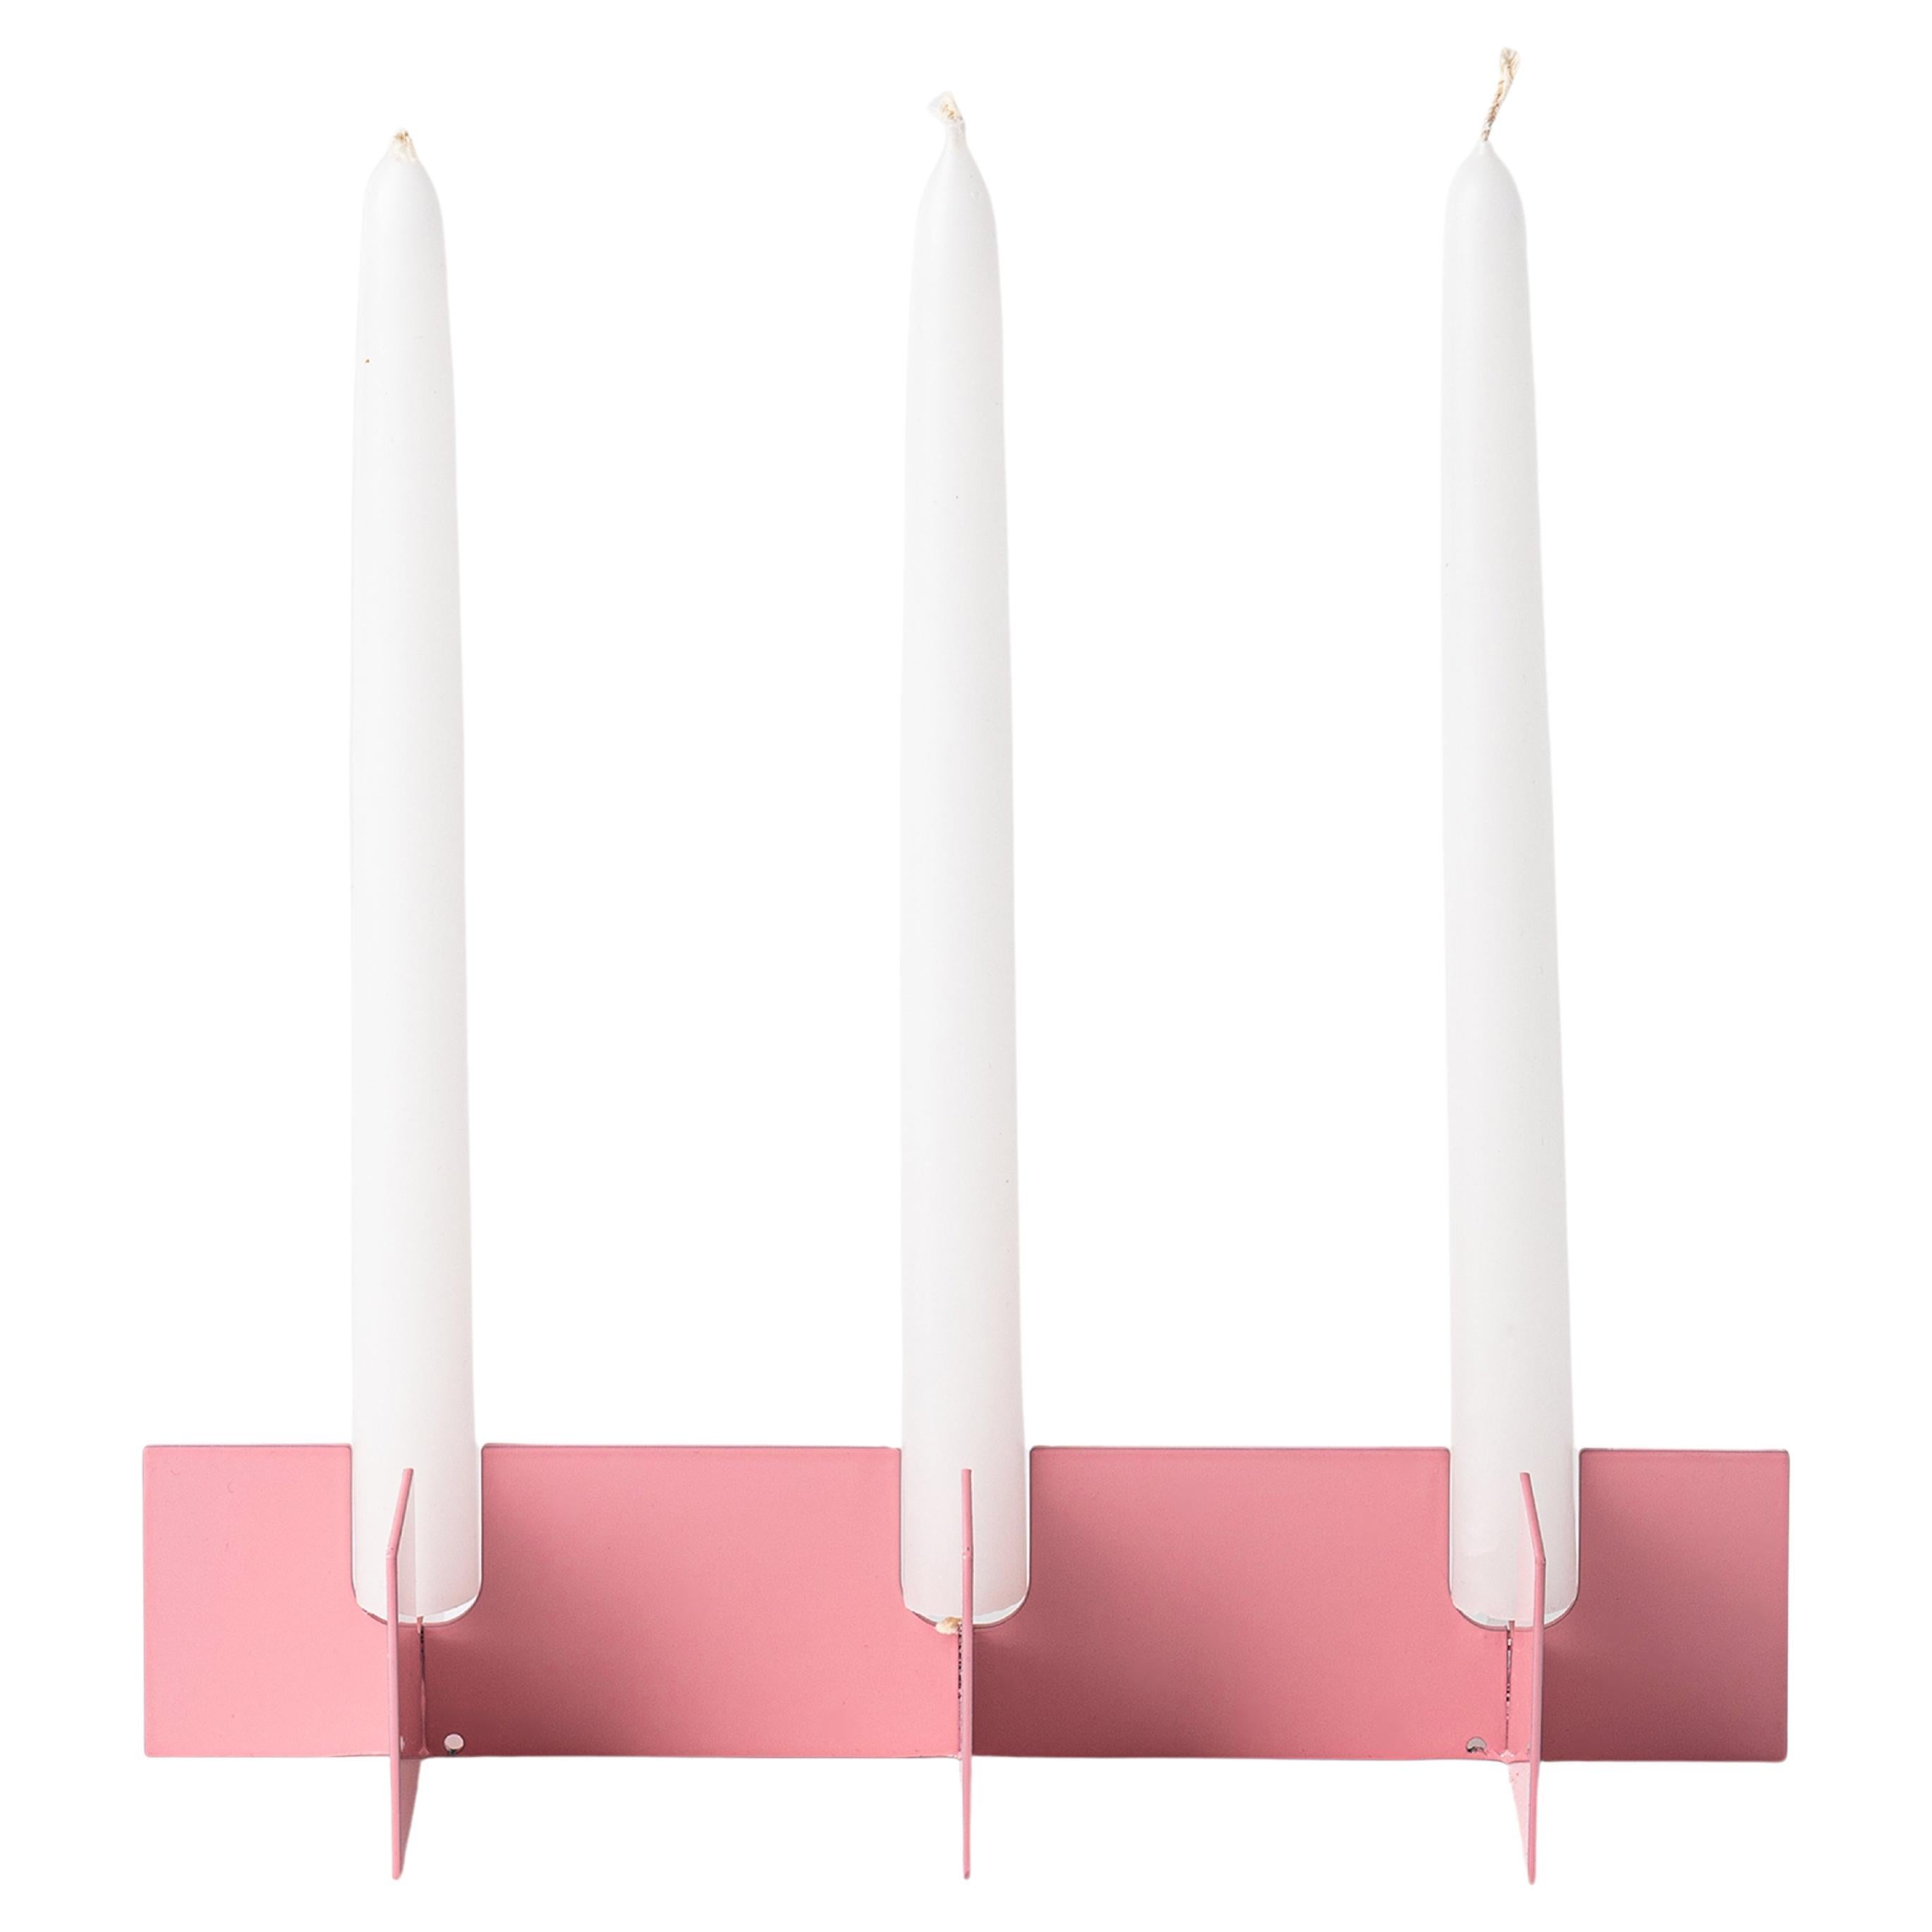 Porte-bougies trois bougies Esnaf moderne contemporain rose